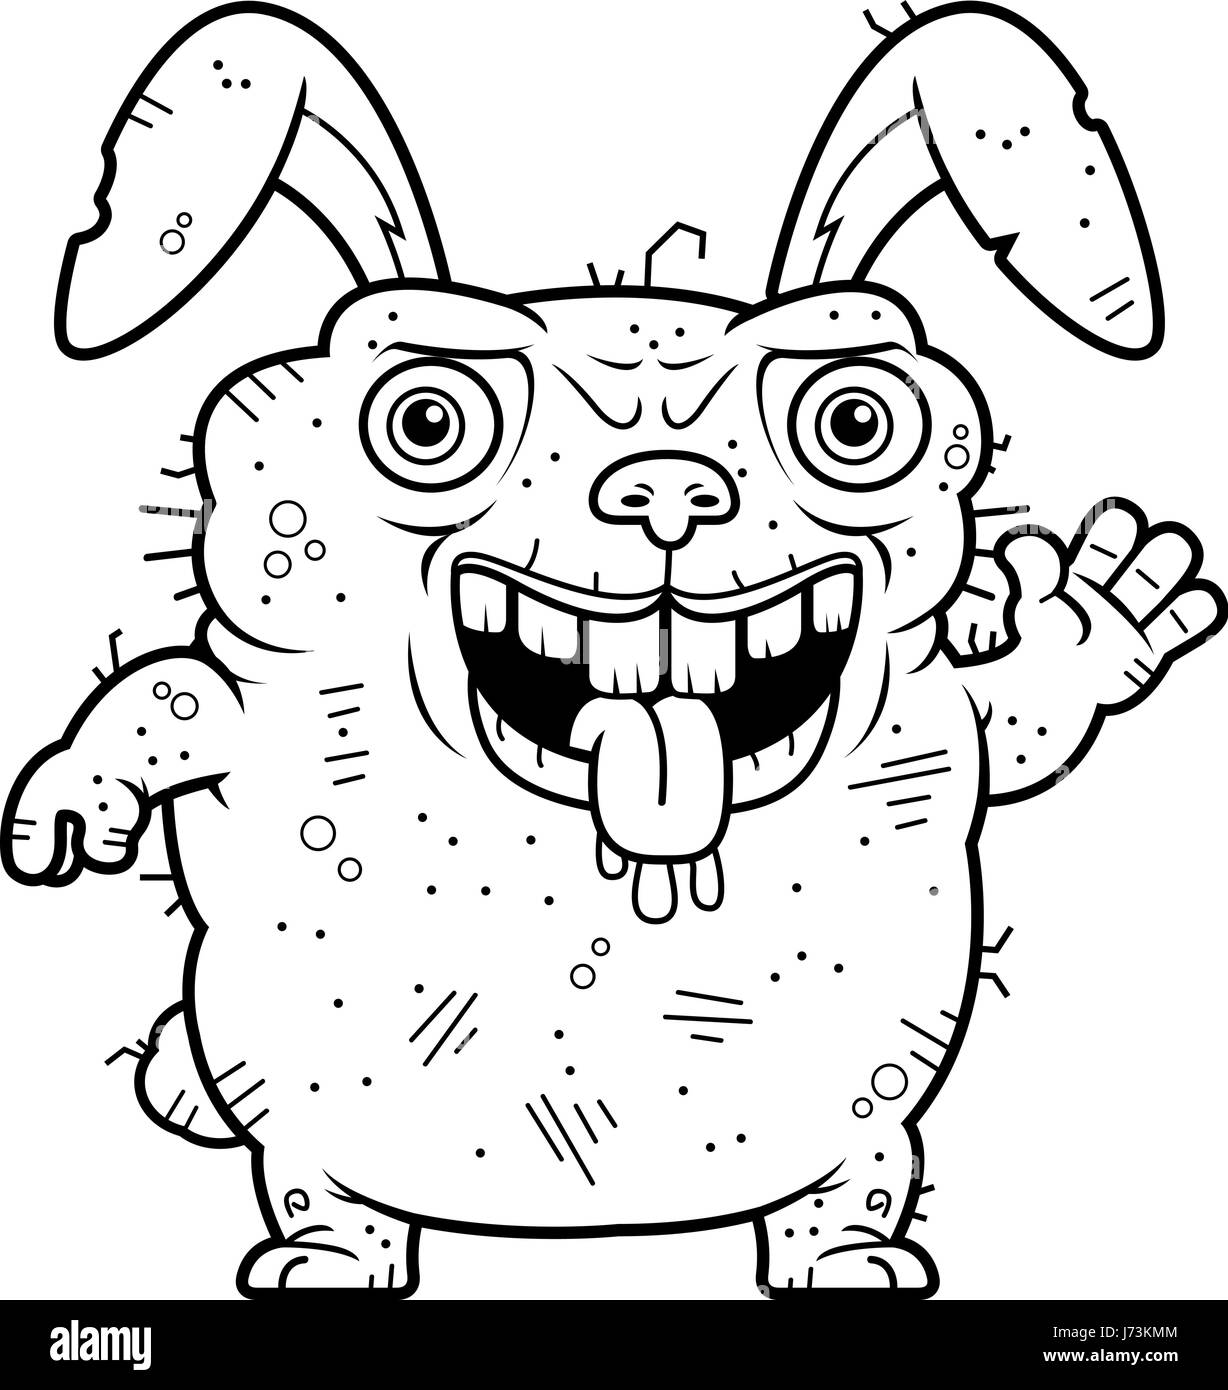 Ugly bunny drawing